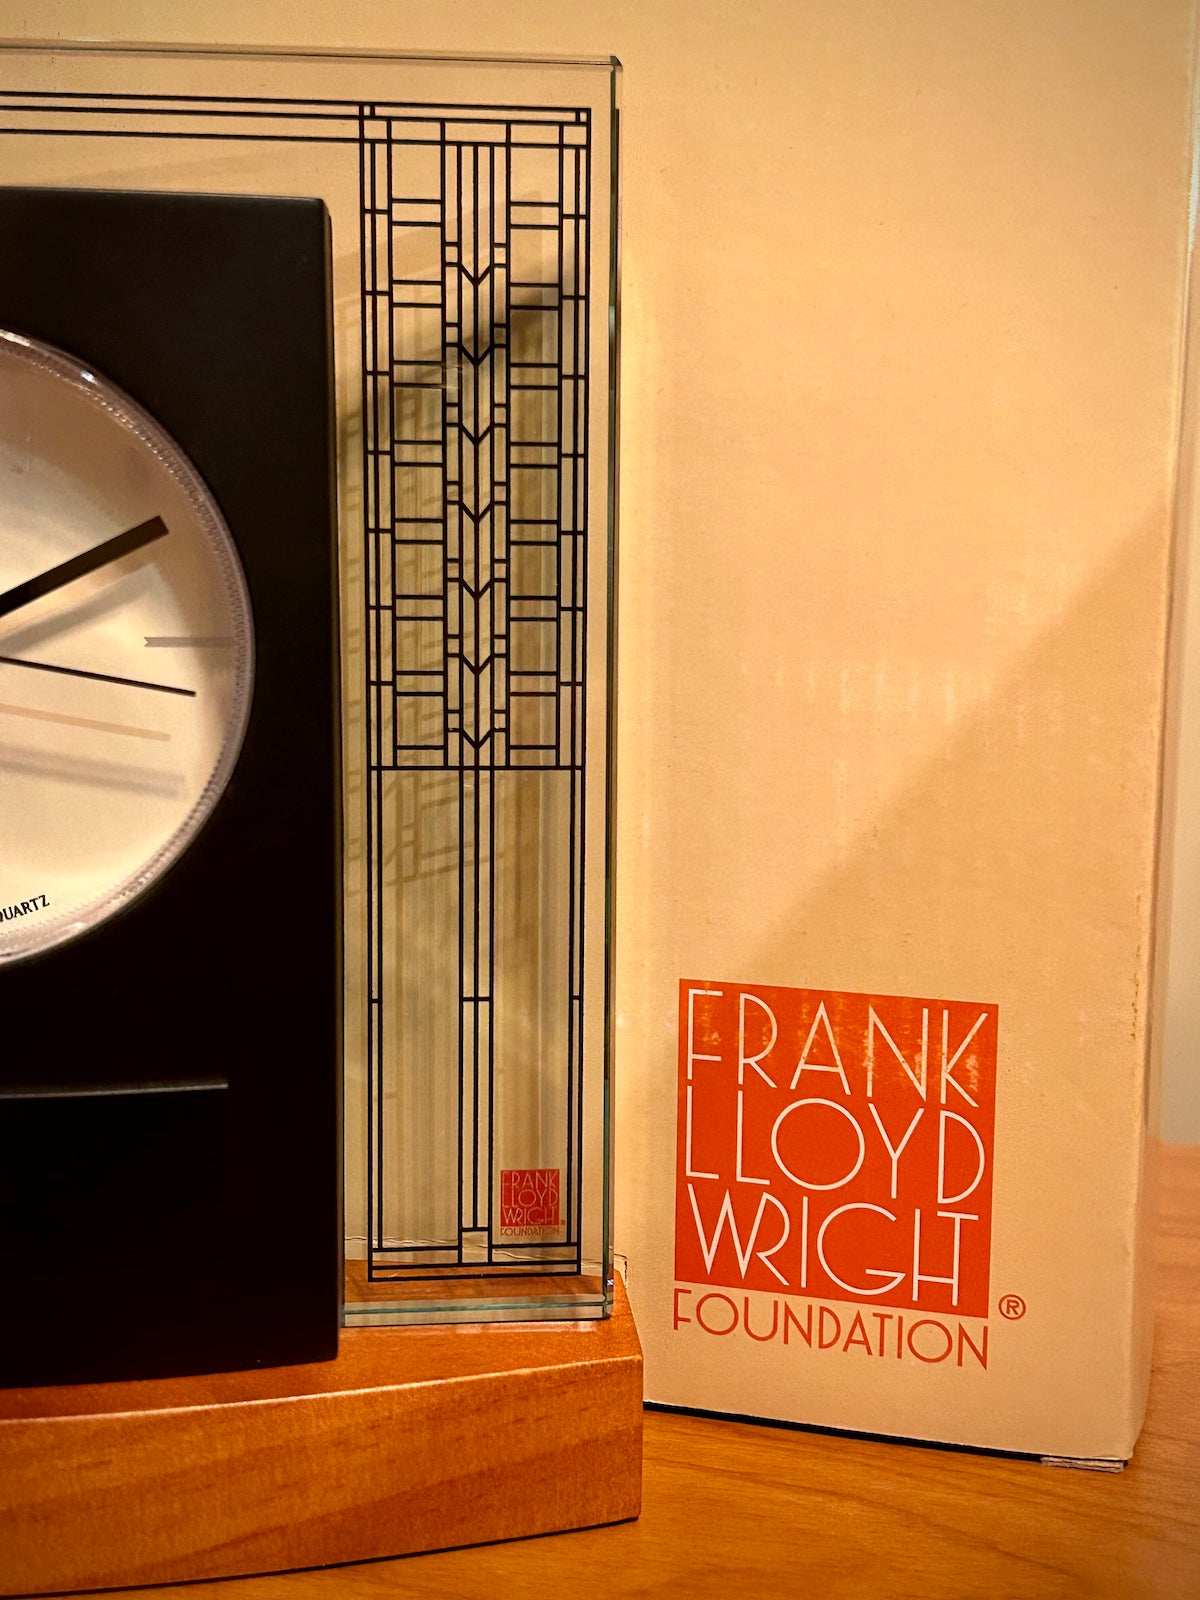 Bulova Frank Lloyd Wright Glasner House Clock